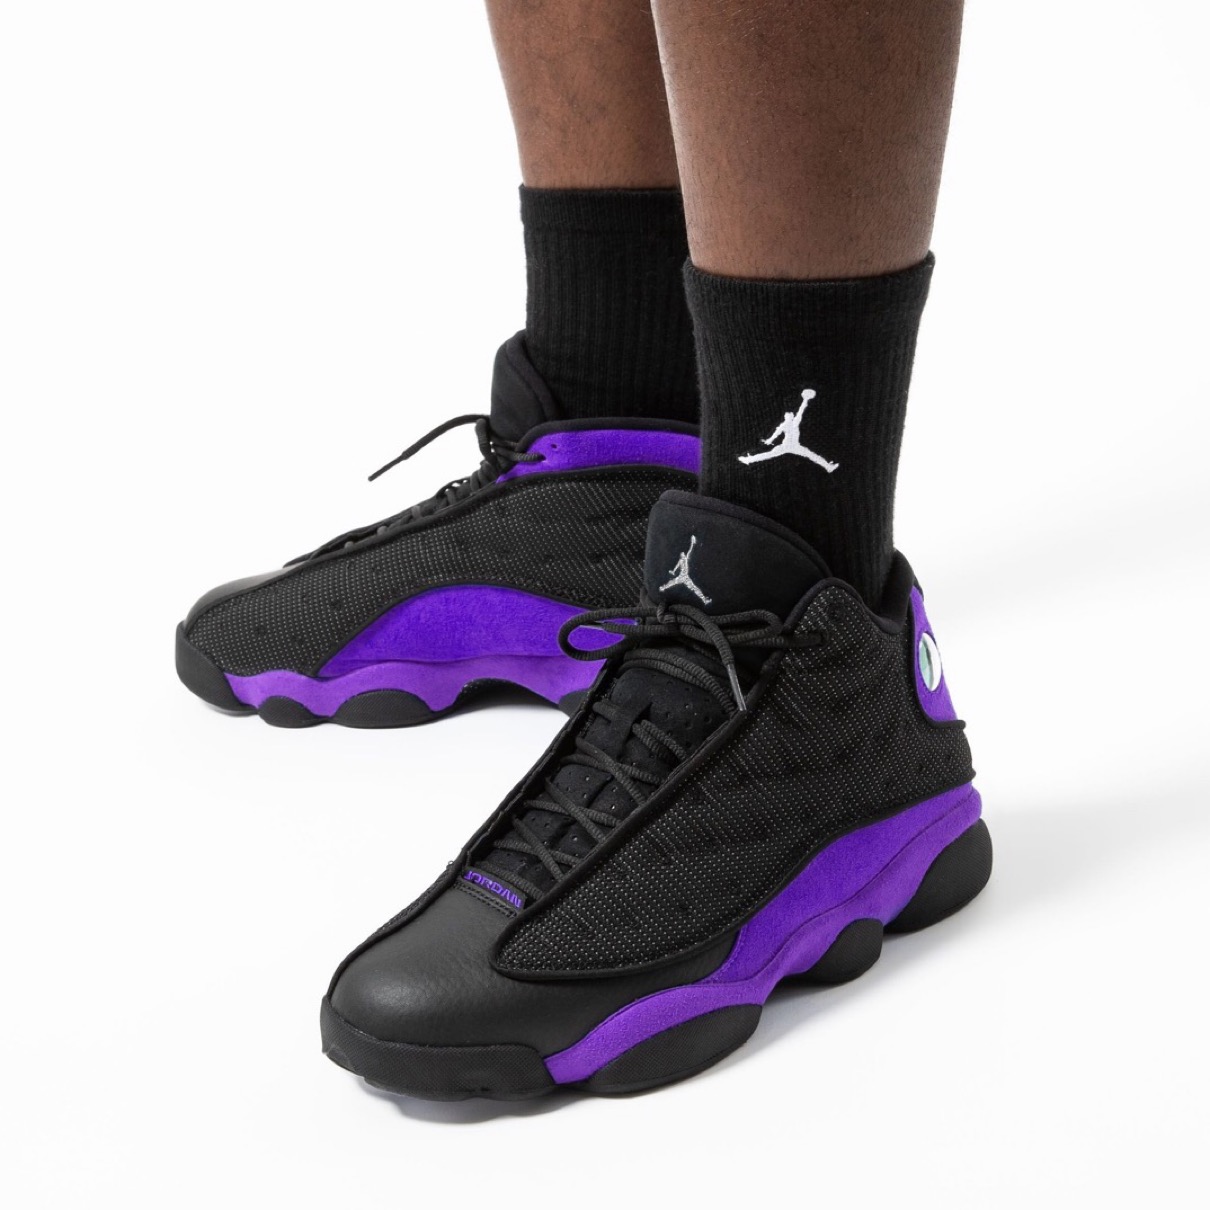 【Nike】Air Jordan 13 Retro Court Purple が2021年12月24日に発売予定 UP TO DATE